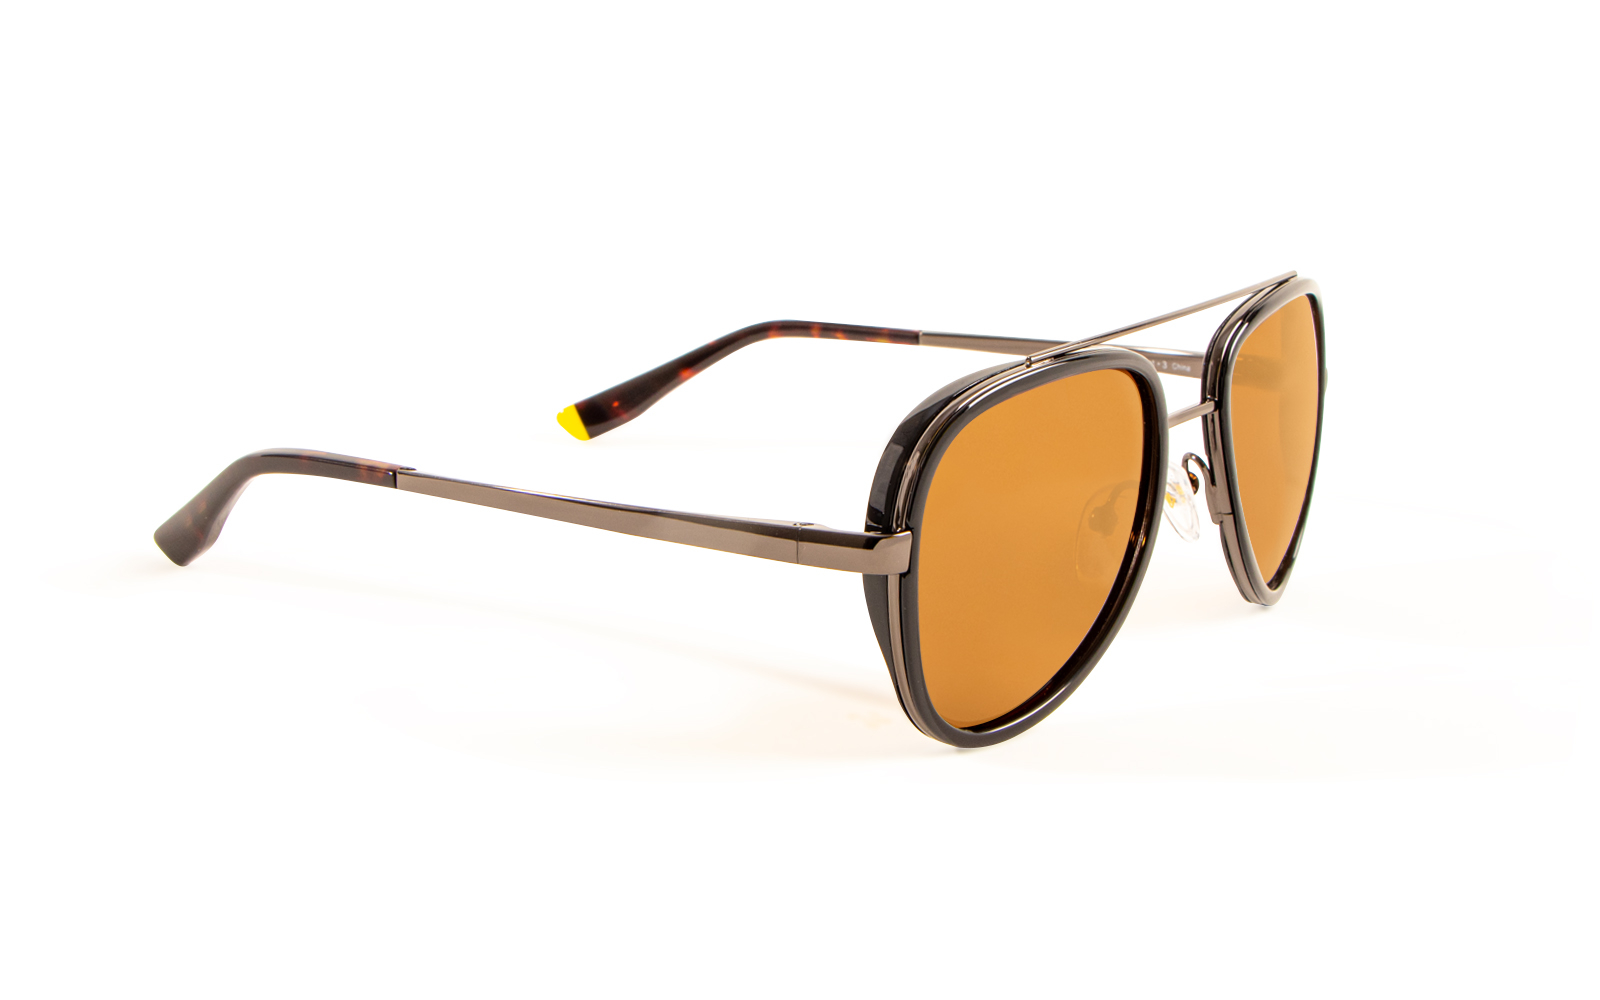 Invicta Men's S1 Rally Rectangular Sunglasses, Orange (23080-S1R-01-05)